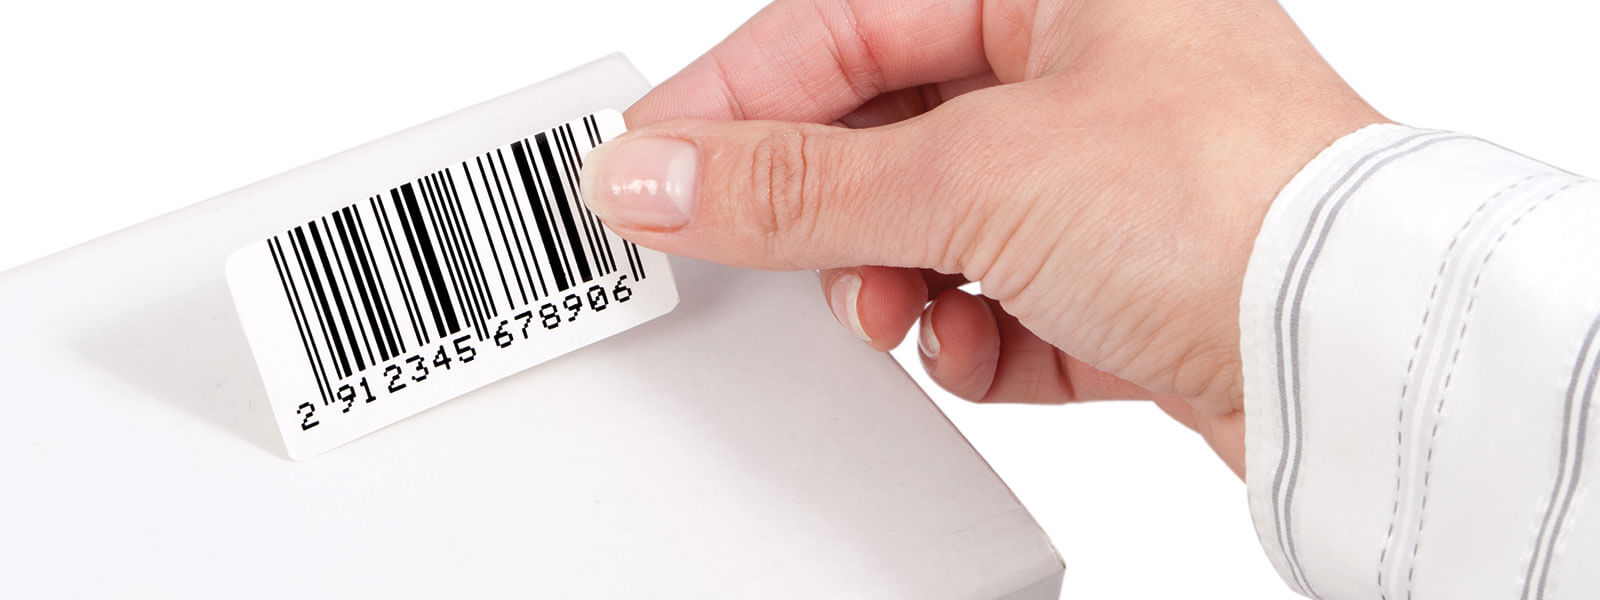 print short run barcode labels